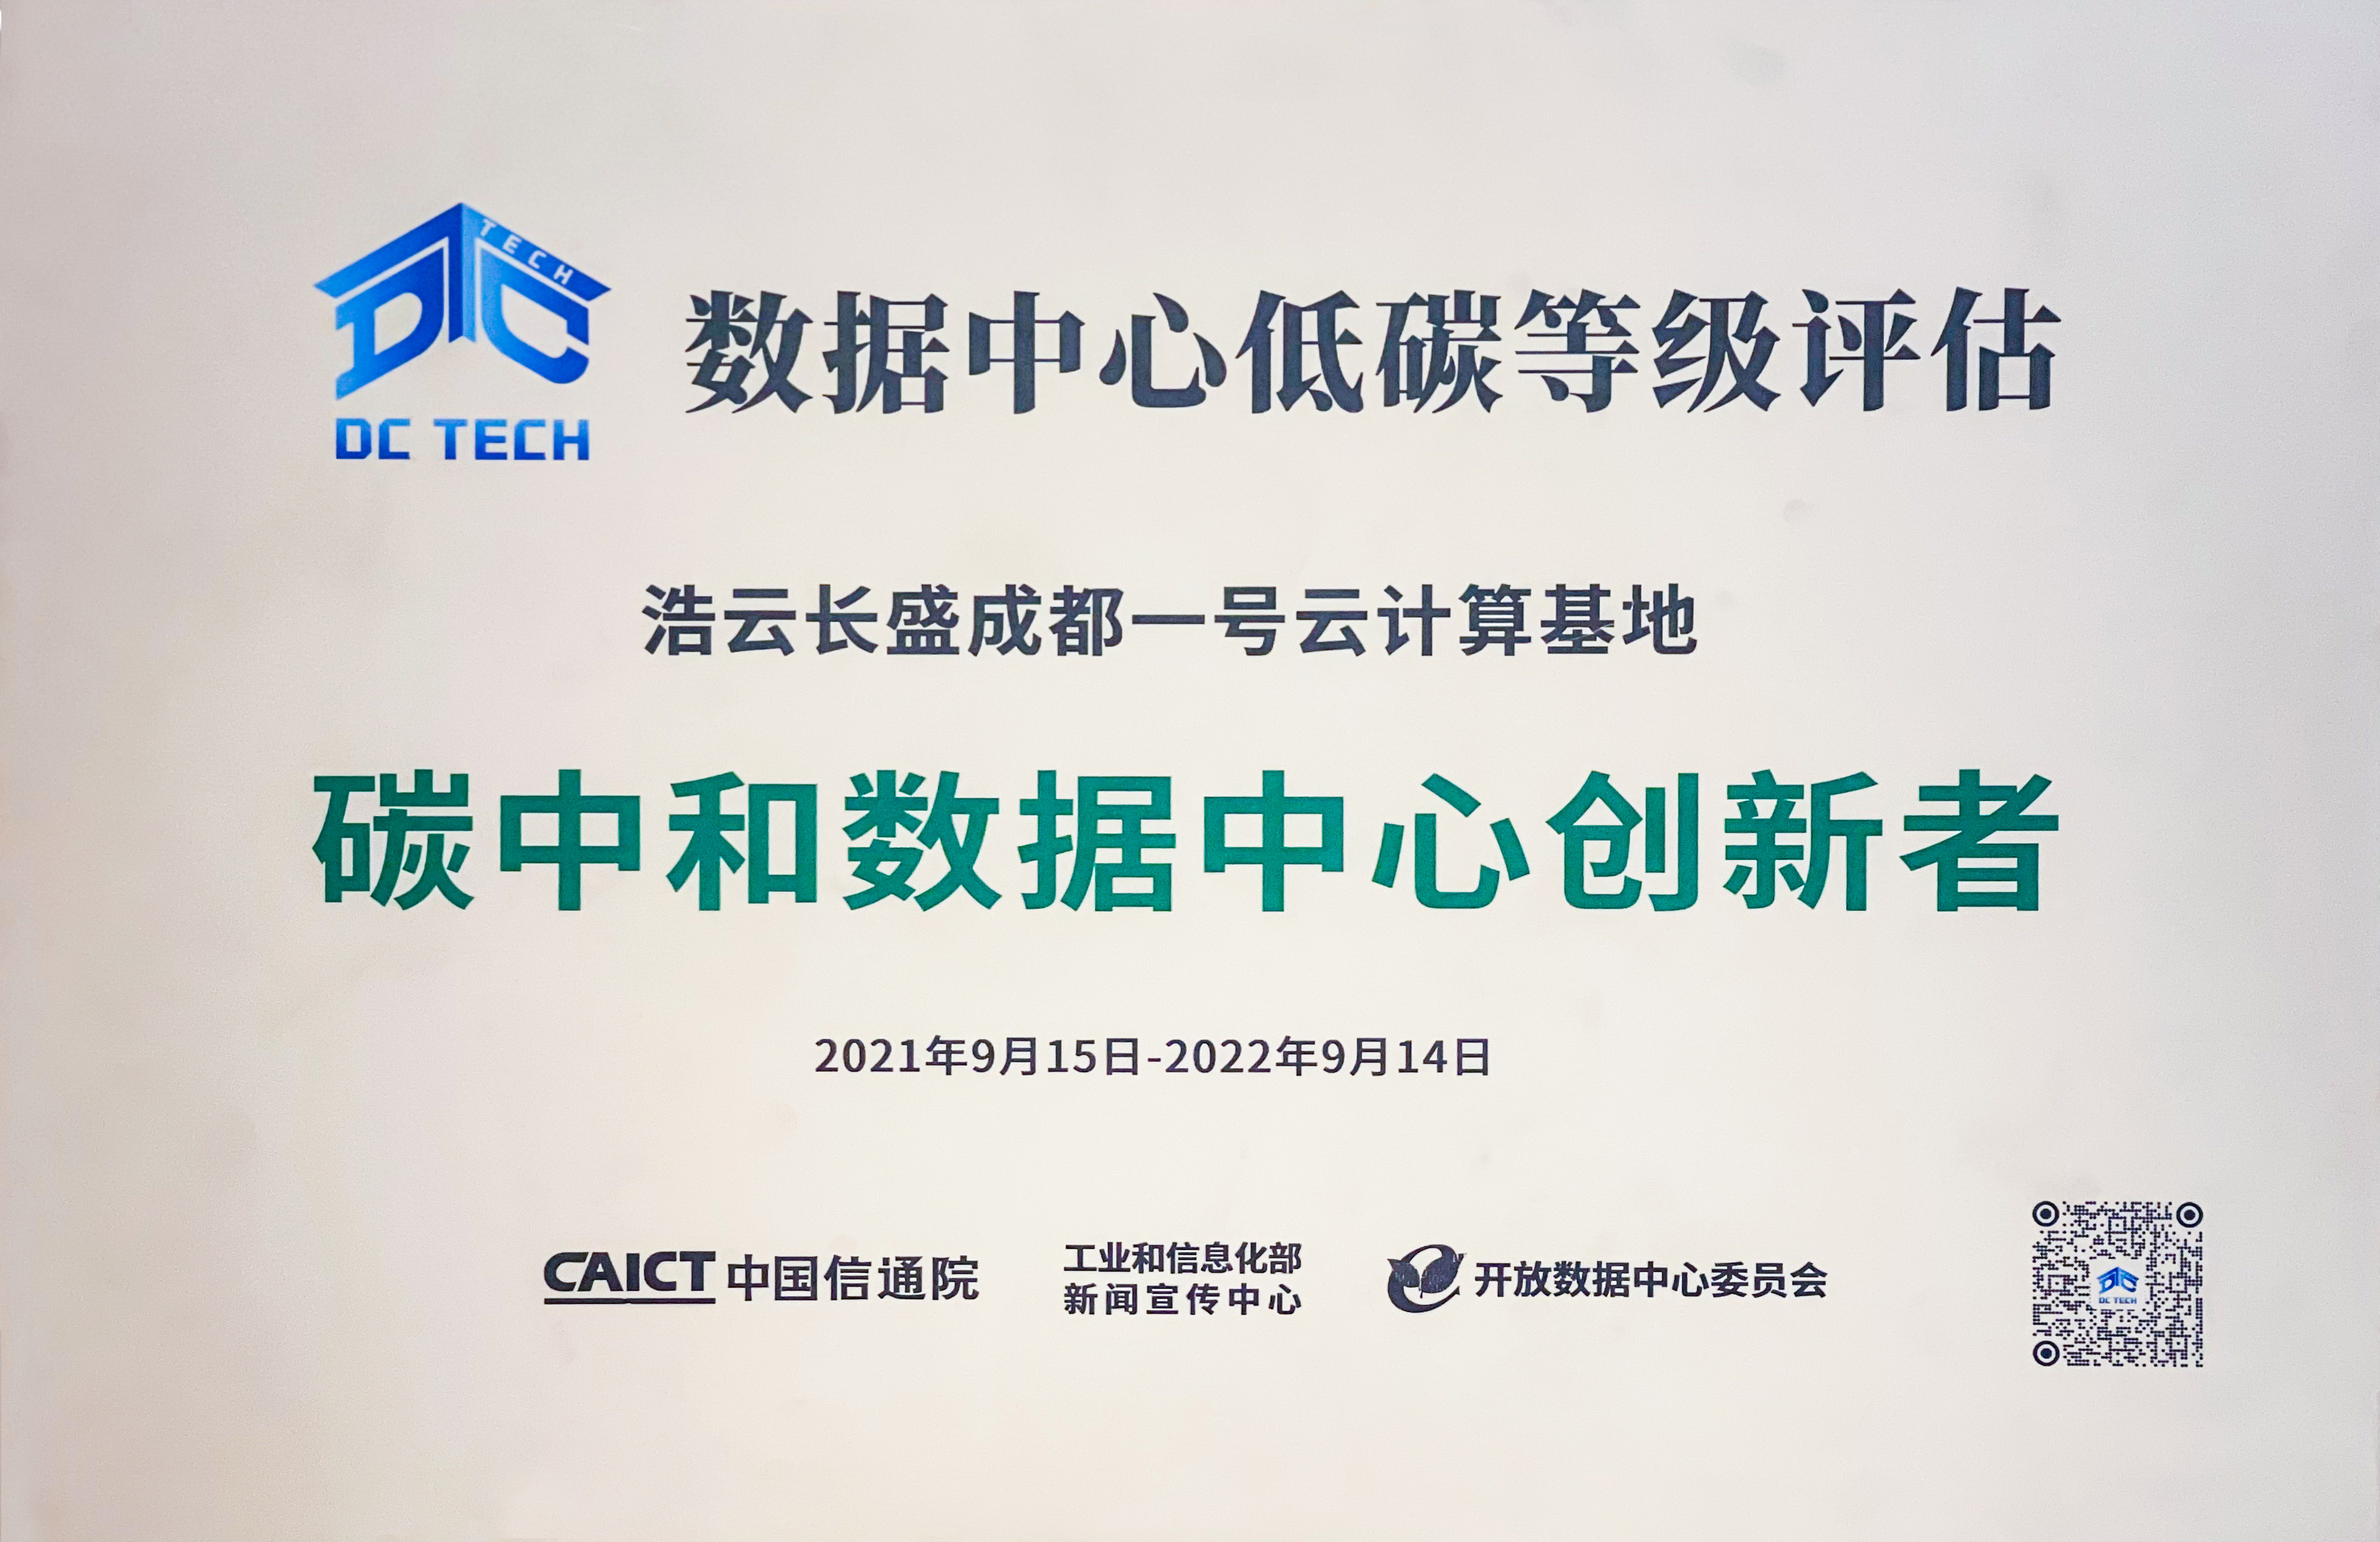 Pursue "Green" Development | Hotwon Won the "Carbon Neutral Data Center Innovator" (4A) Rating